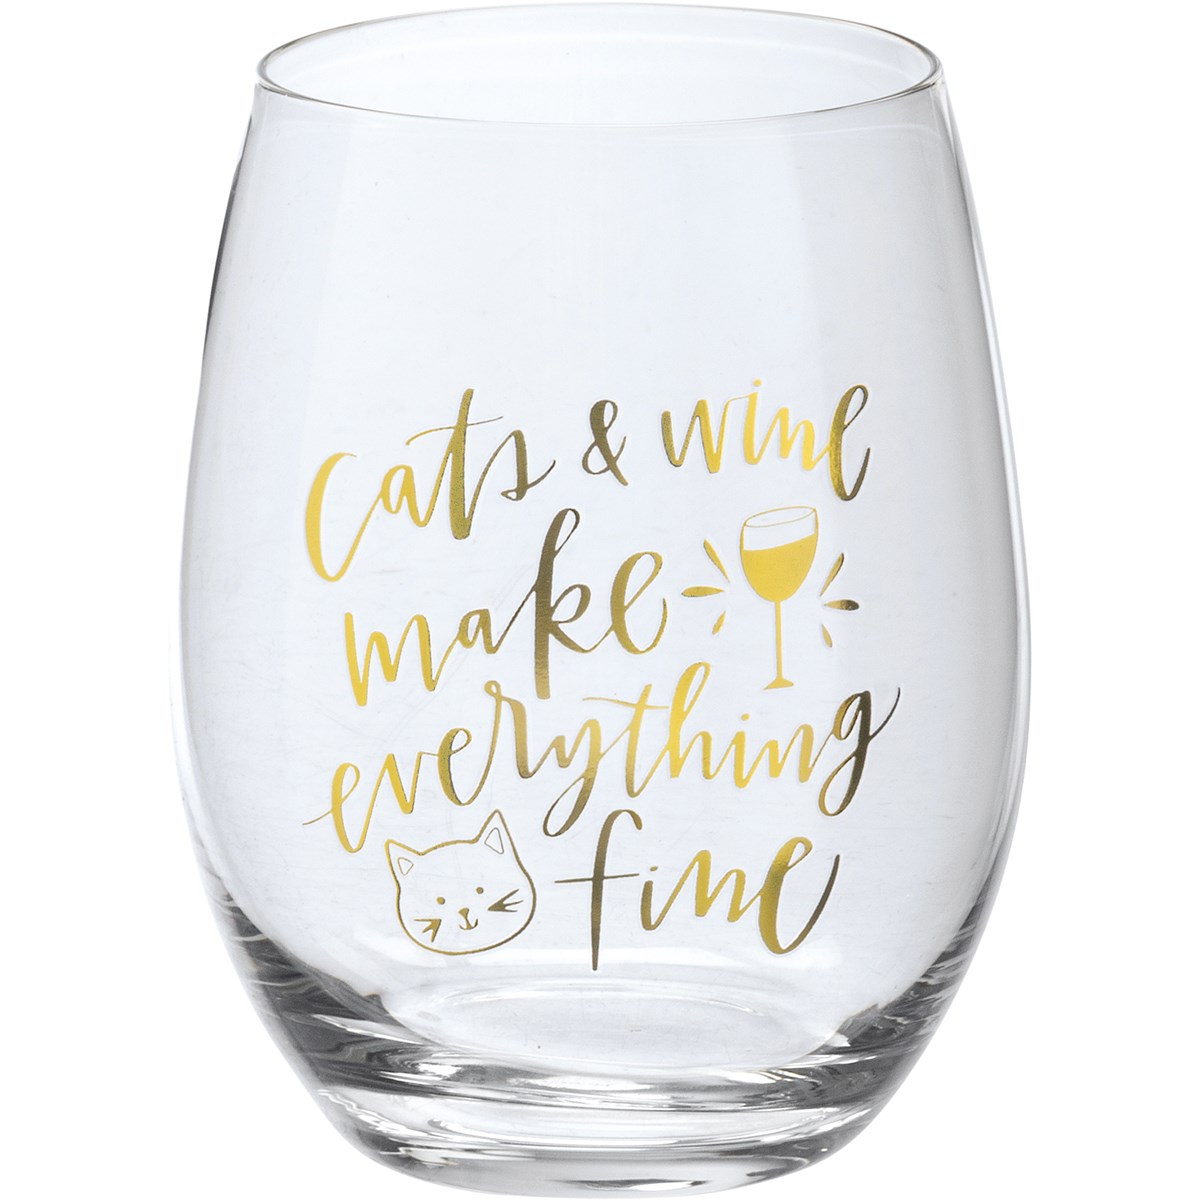 Cats & Wine Make Everything Fine Wine Glass - Glass